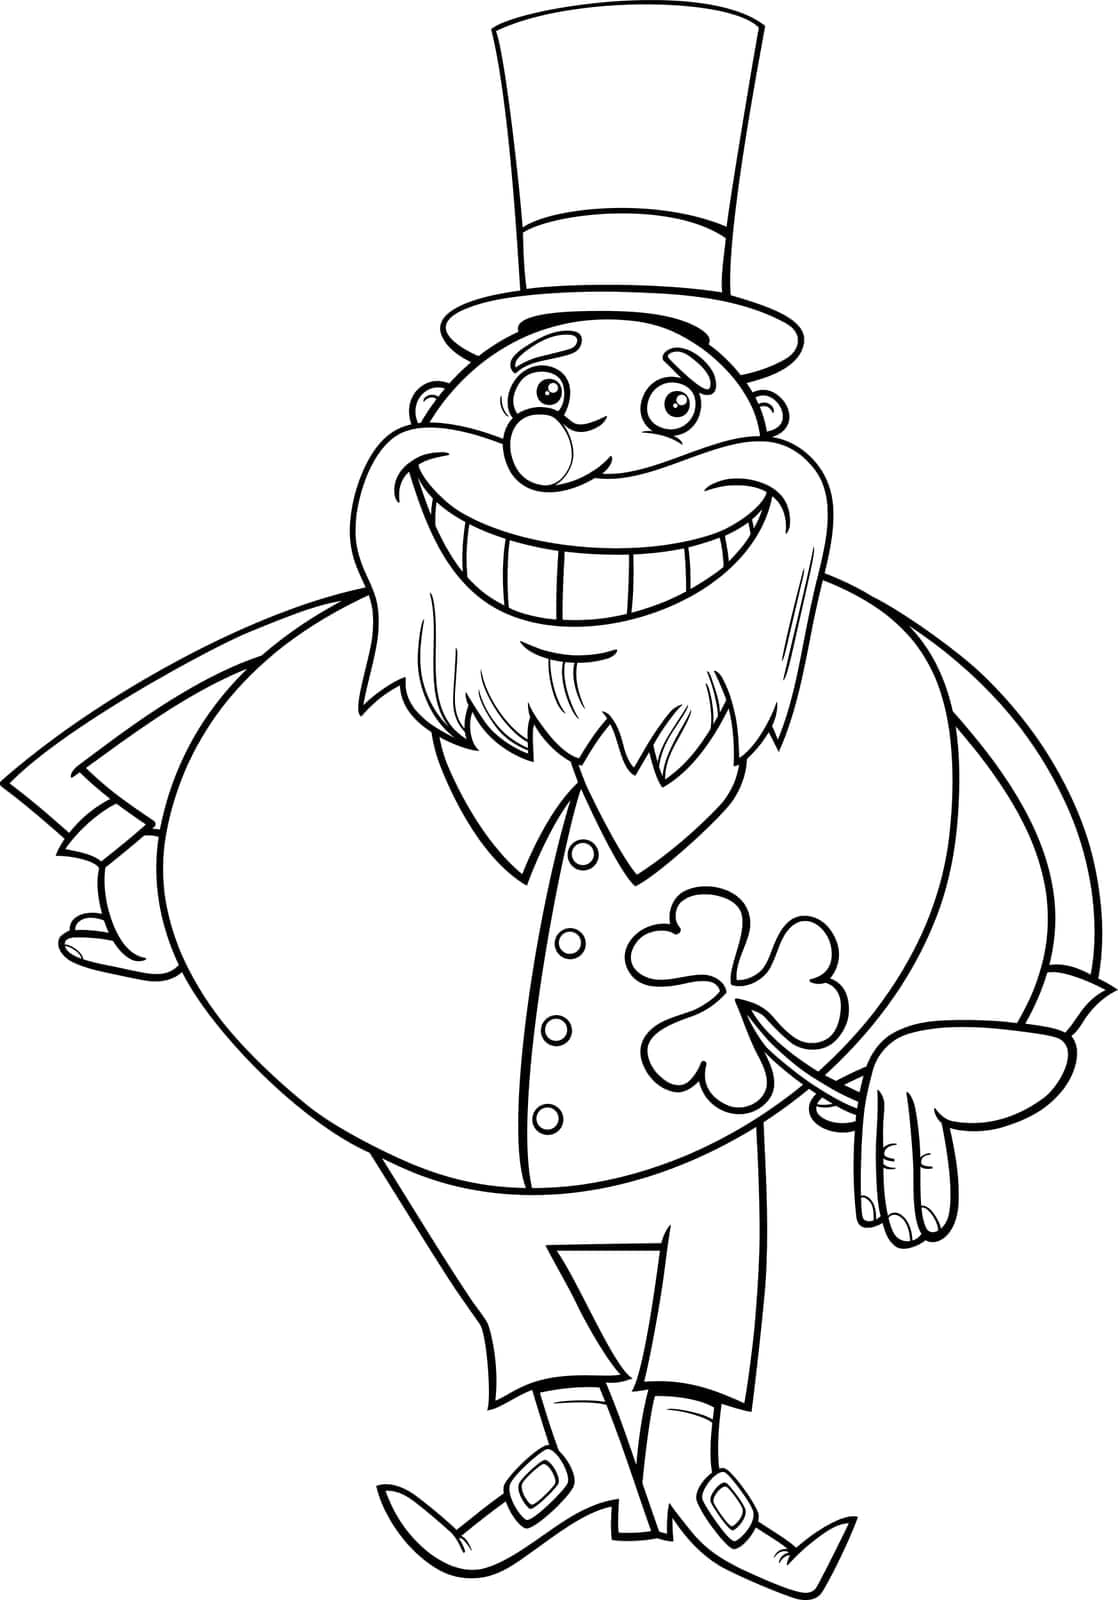 cartoon Leprechaun character on Saint Patrick Day coloring page by izakowski